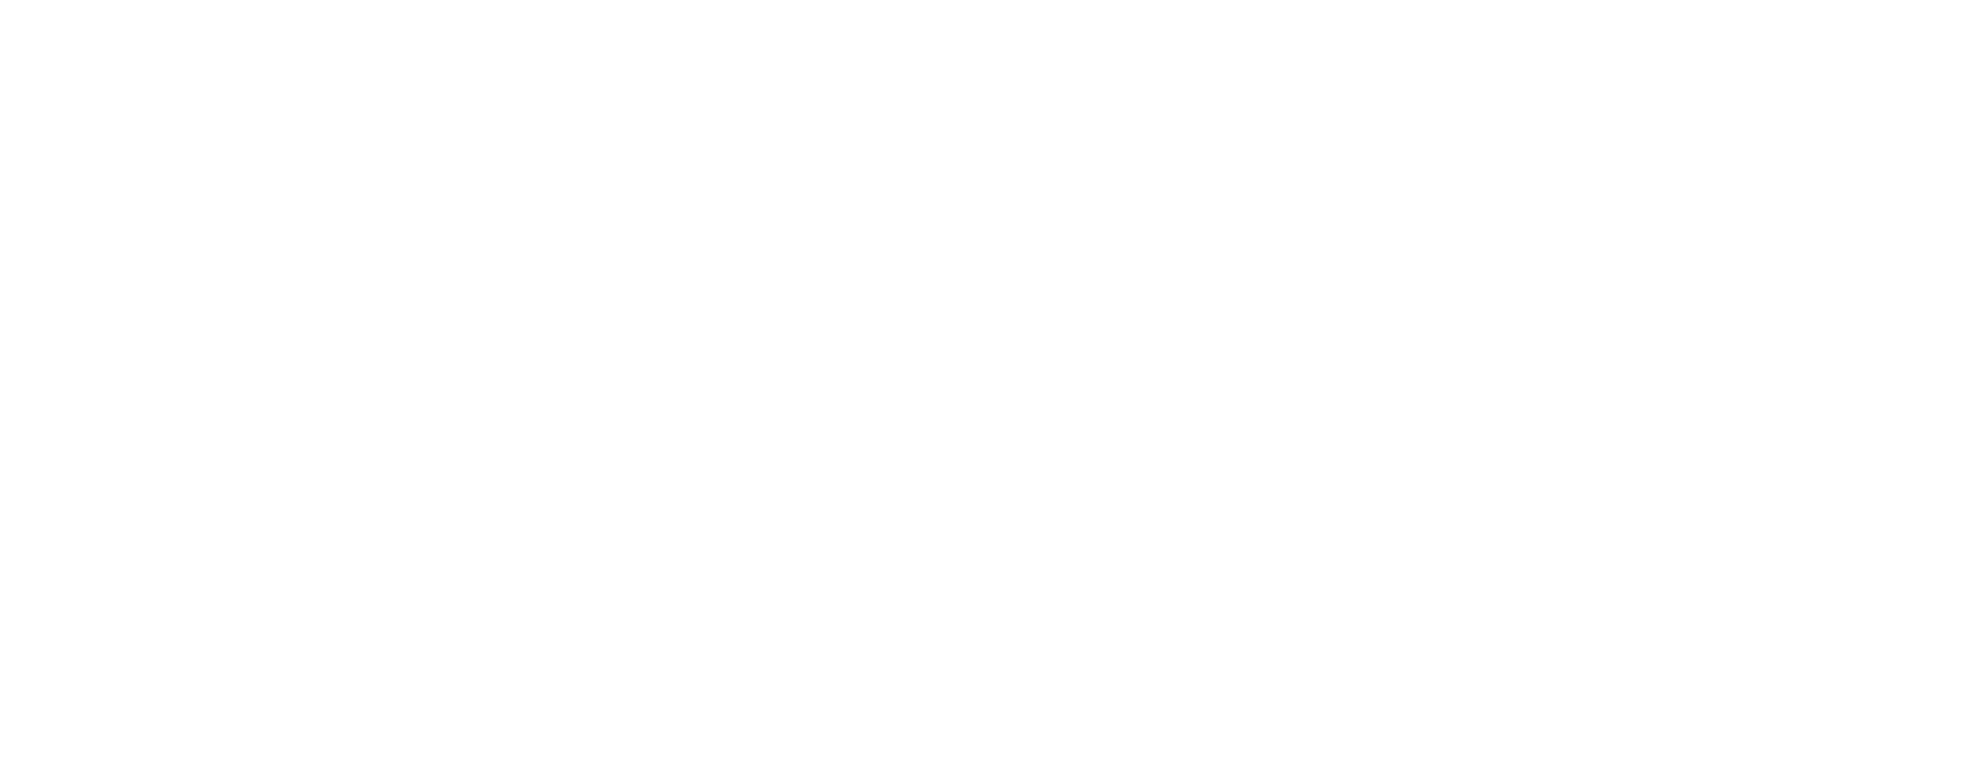 Richard Lennox